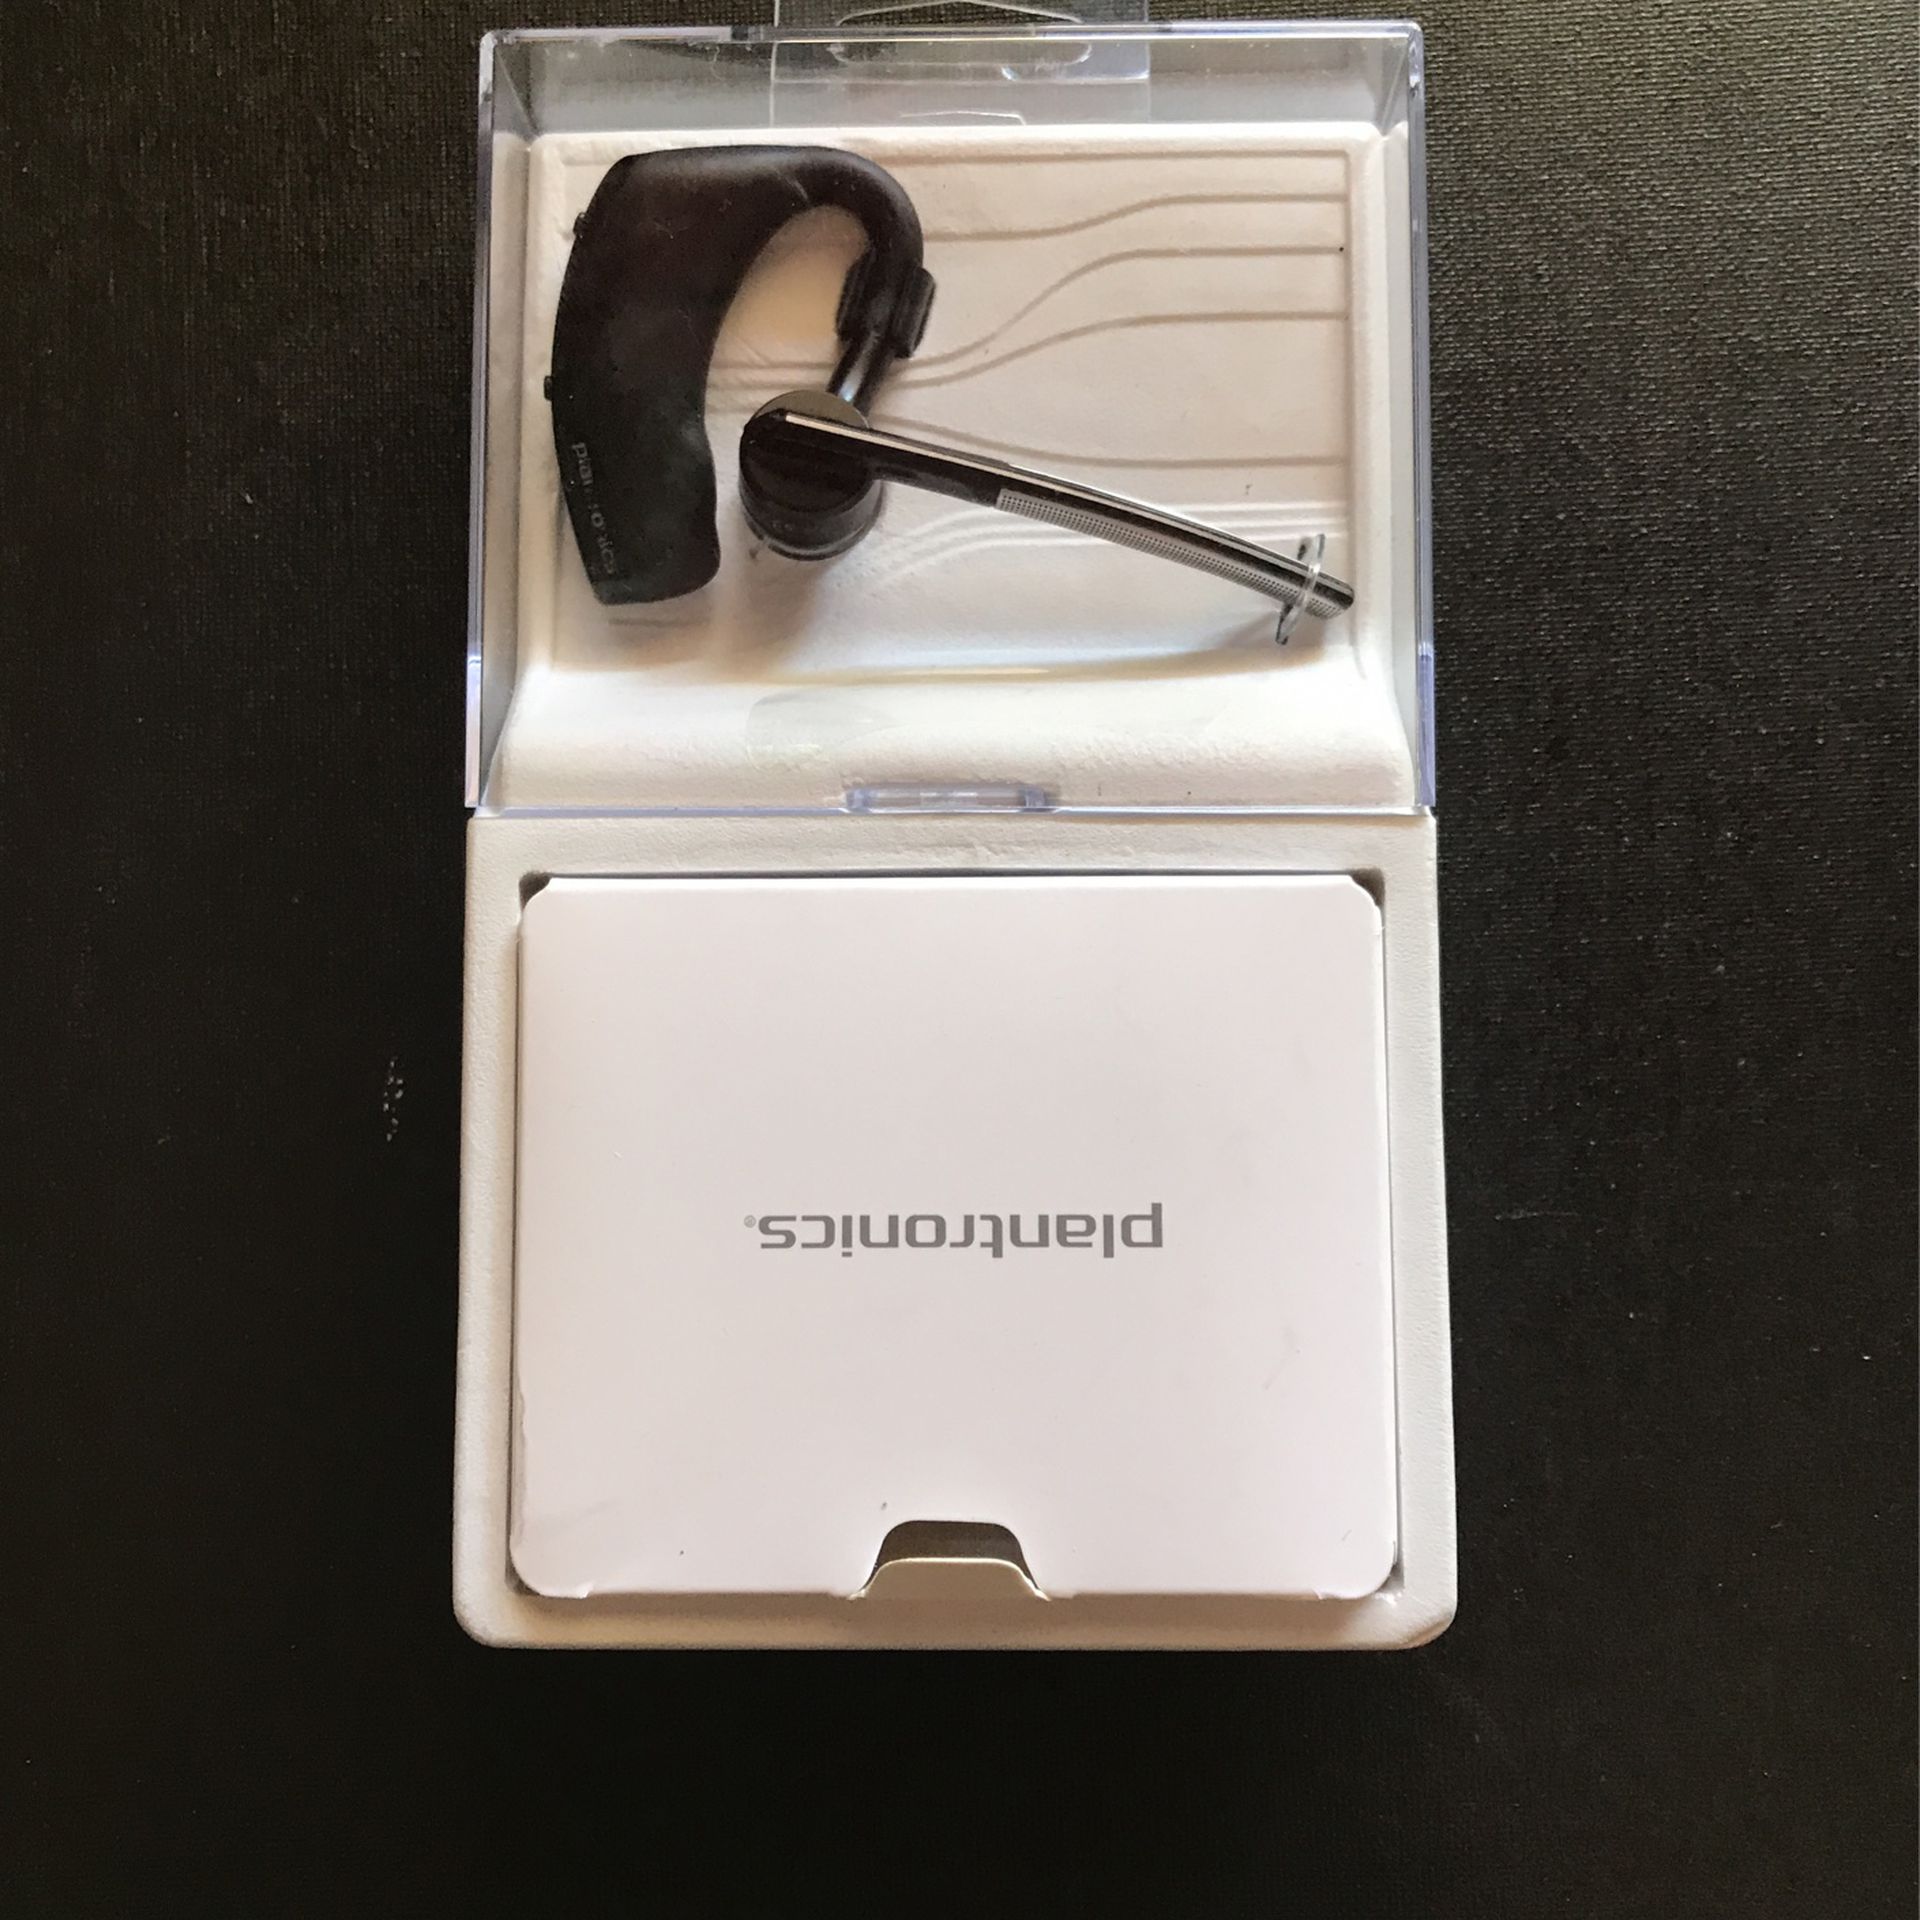 Plantronics Voyager Legend Bluetooth Headset - Silver/Black